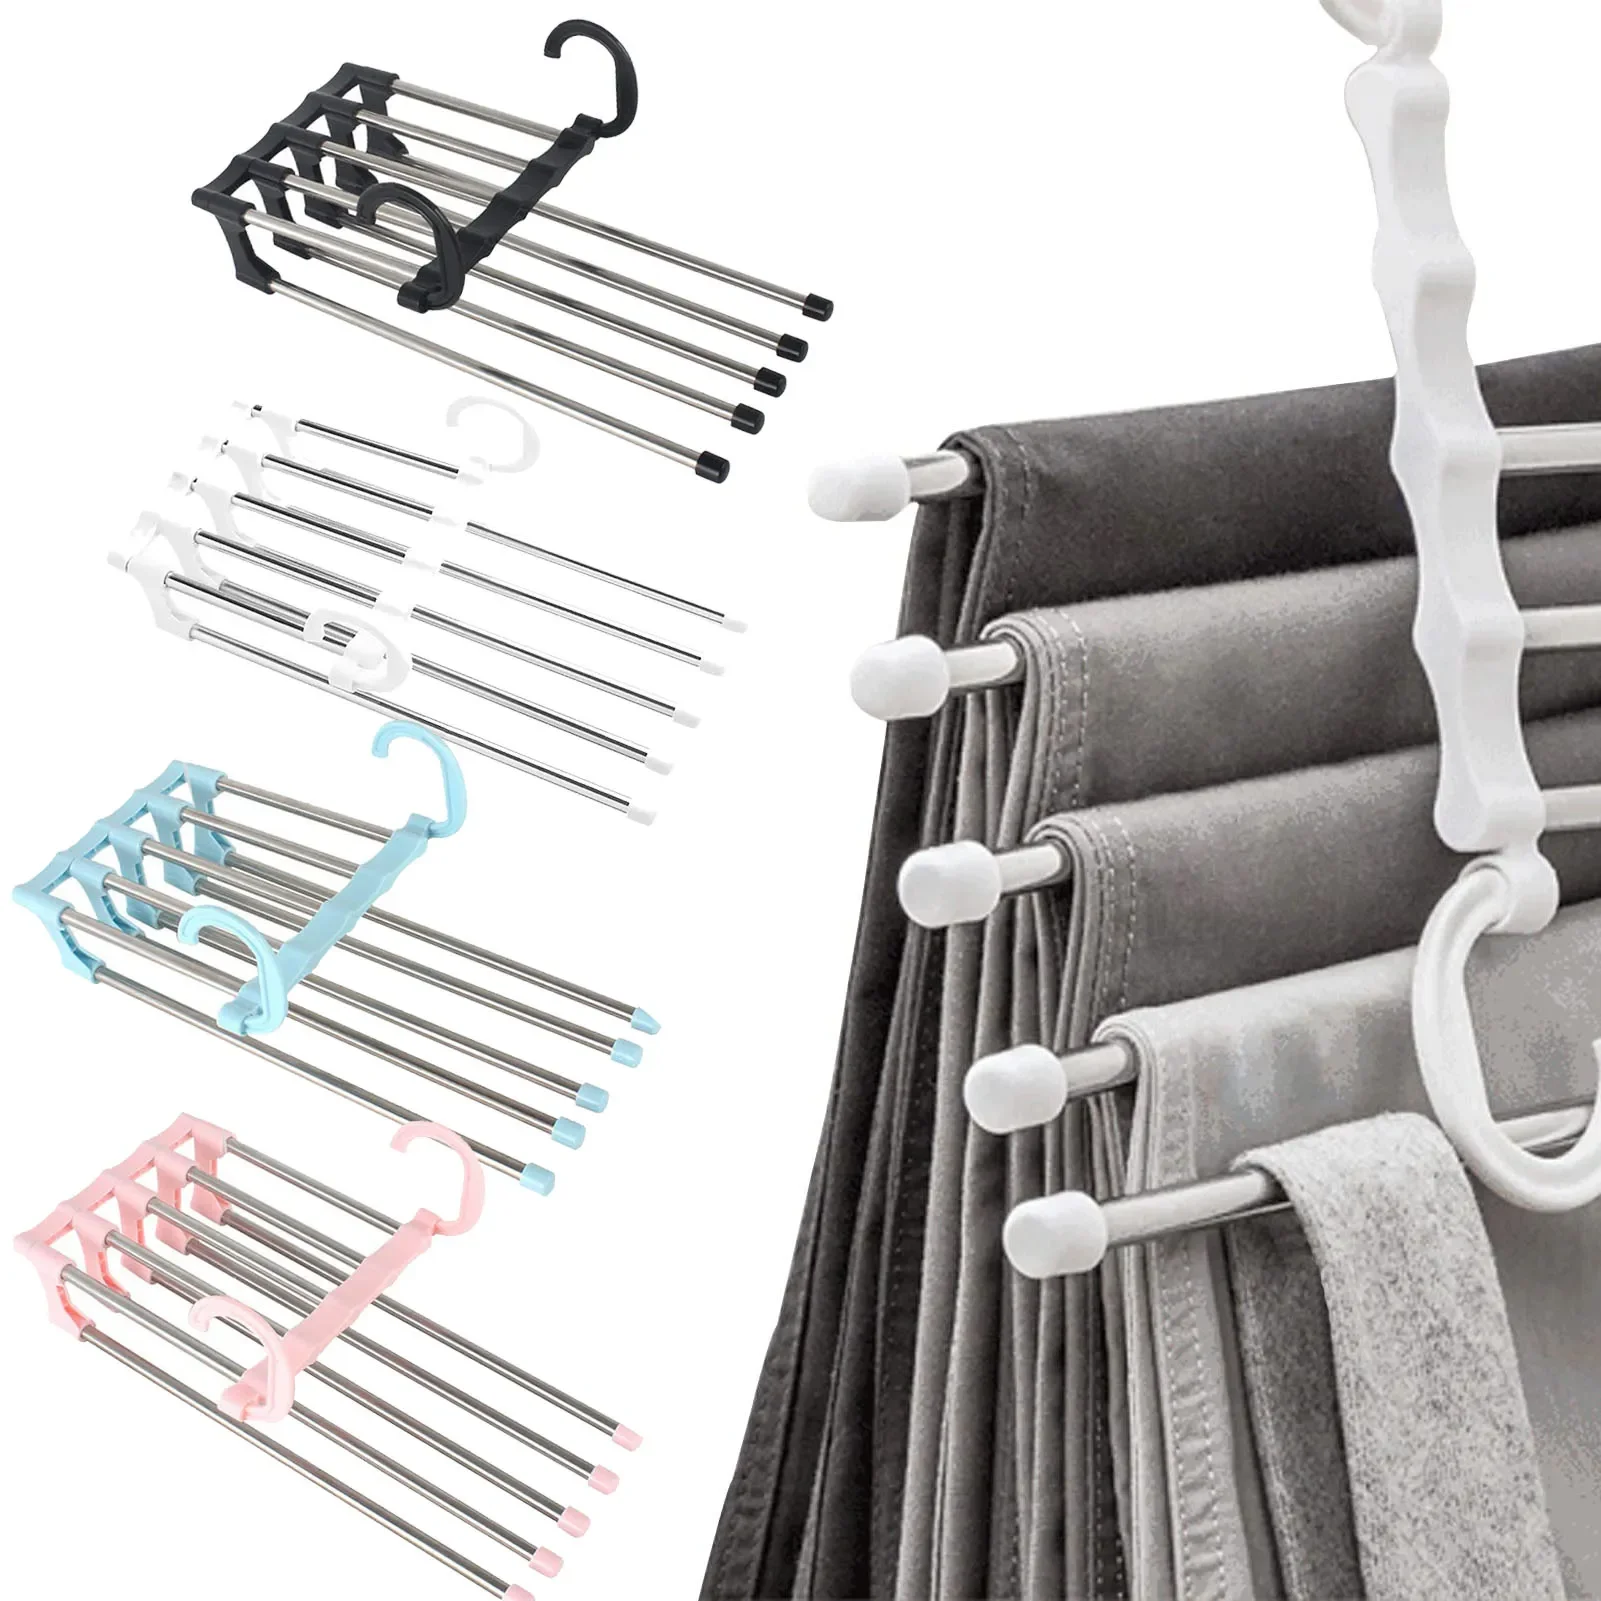 

Folding Hanger Multifunctional Pants Storage for Pant Rack Hanger Clothes Organizer Hangers Save Wardrobe Space Bedroom Closets